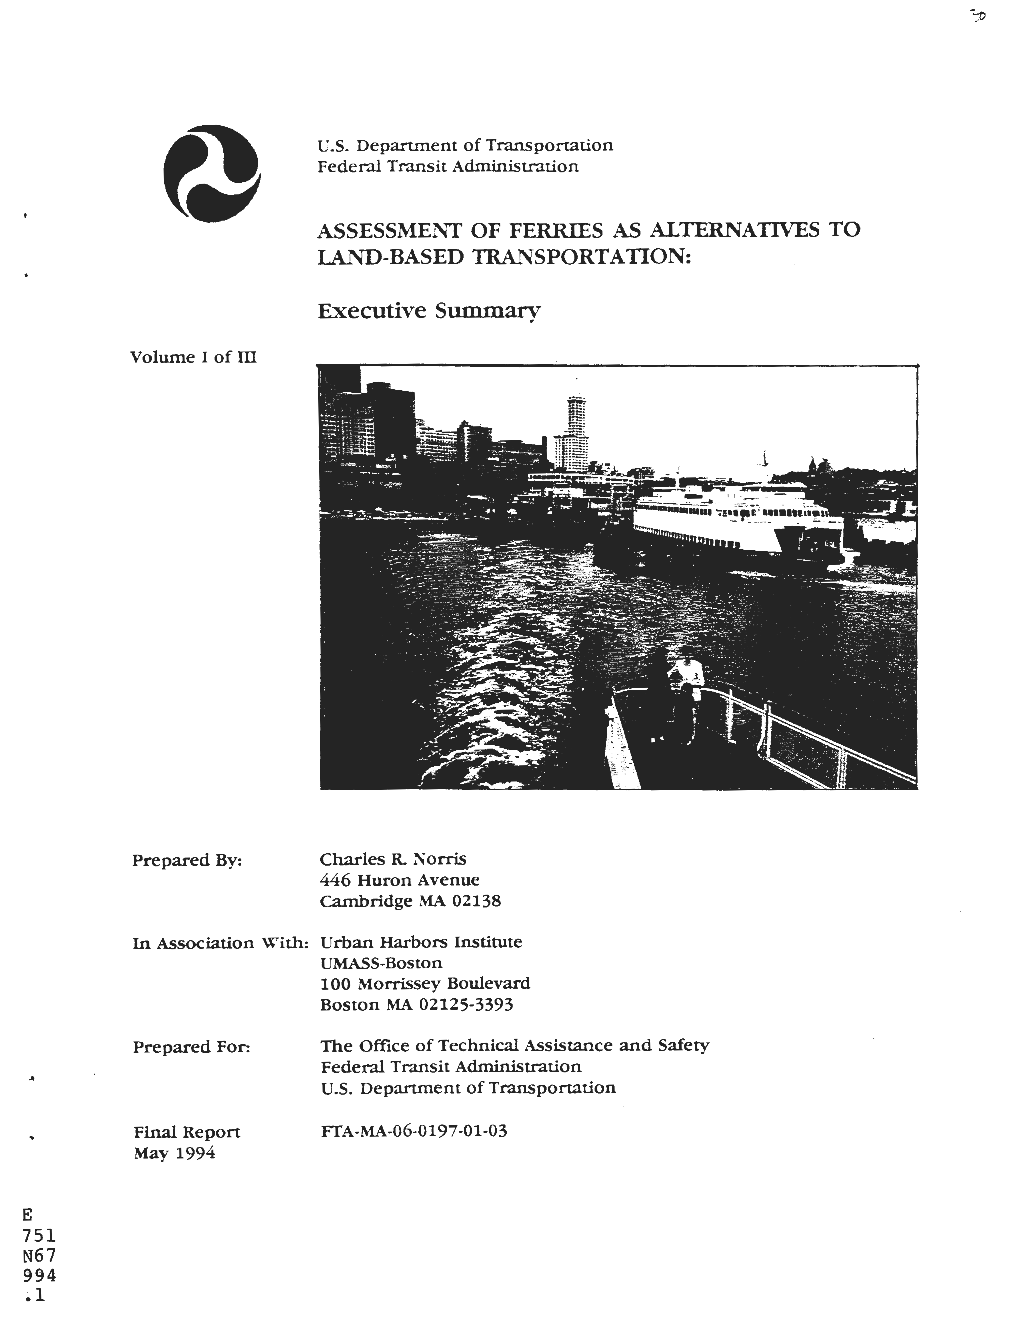 Assessment of Ferries As Alternatives to Land-Based Transportation